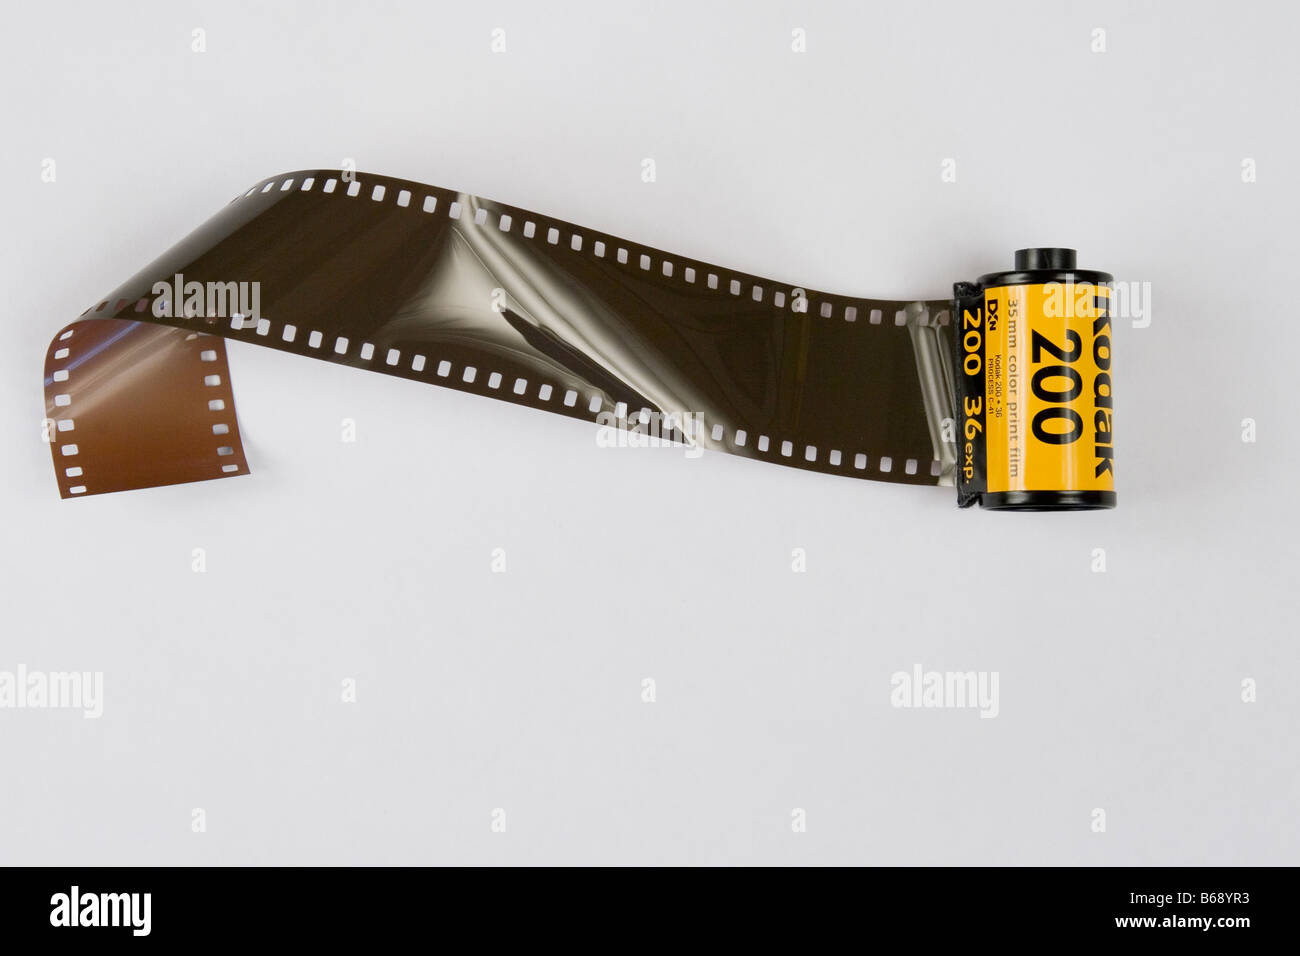 Kodak film, camera film. Stock Photo